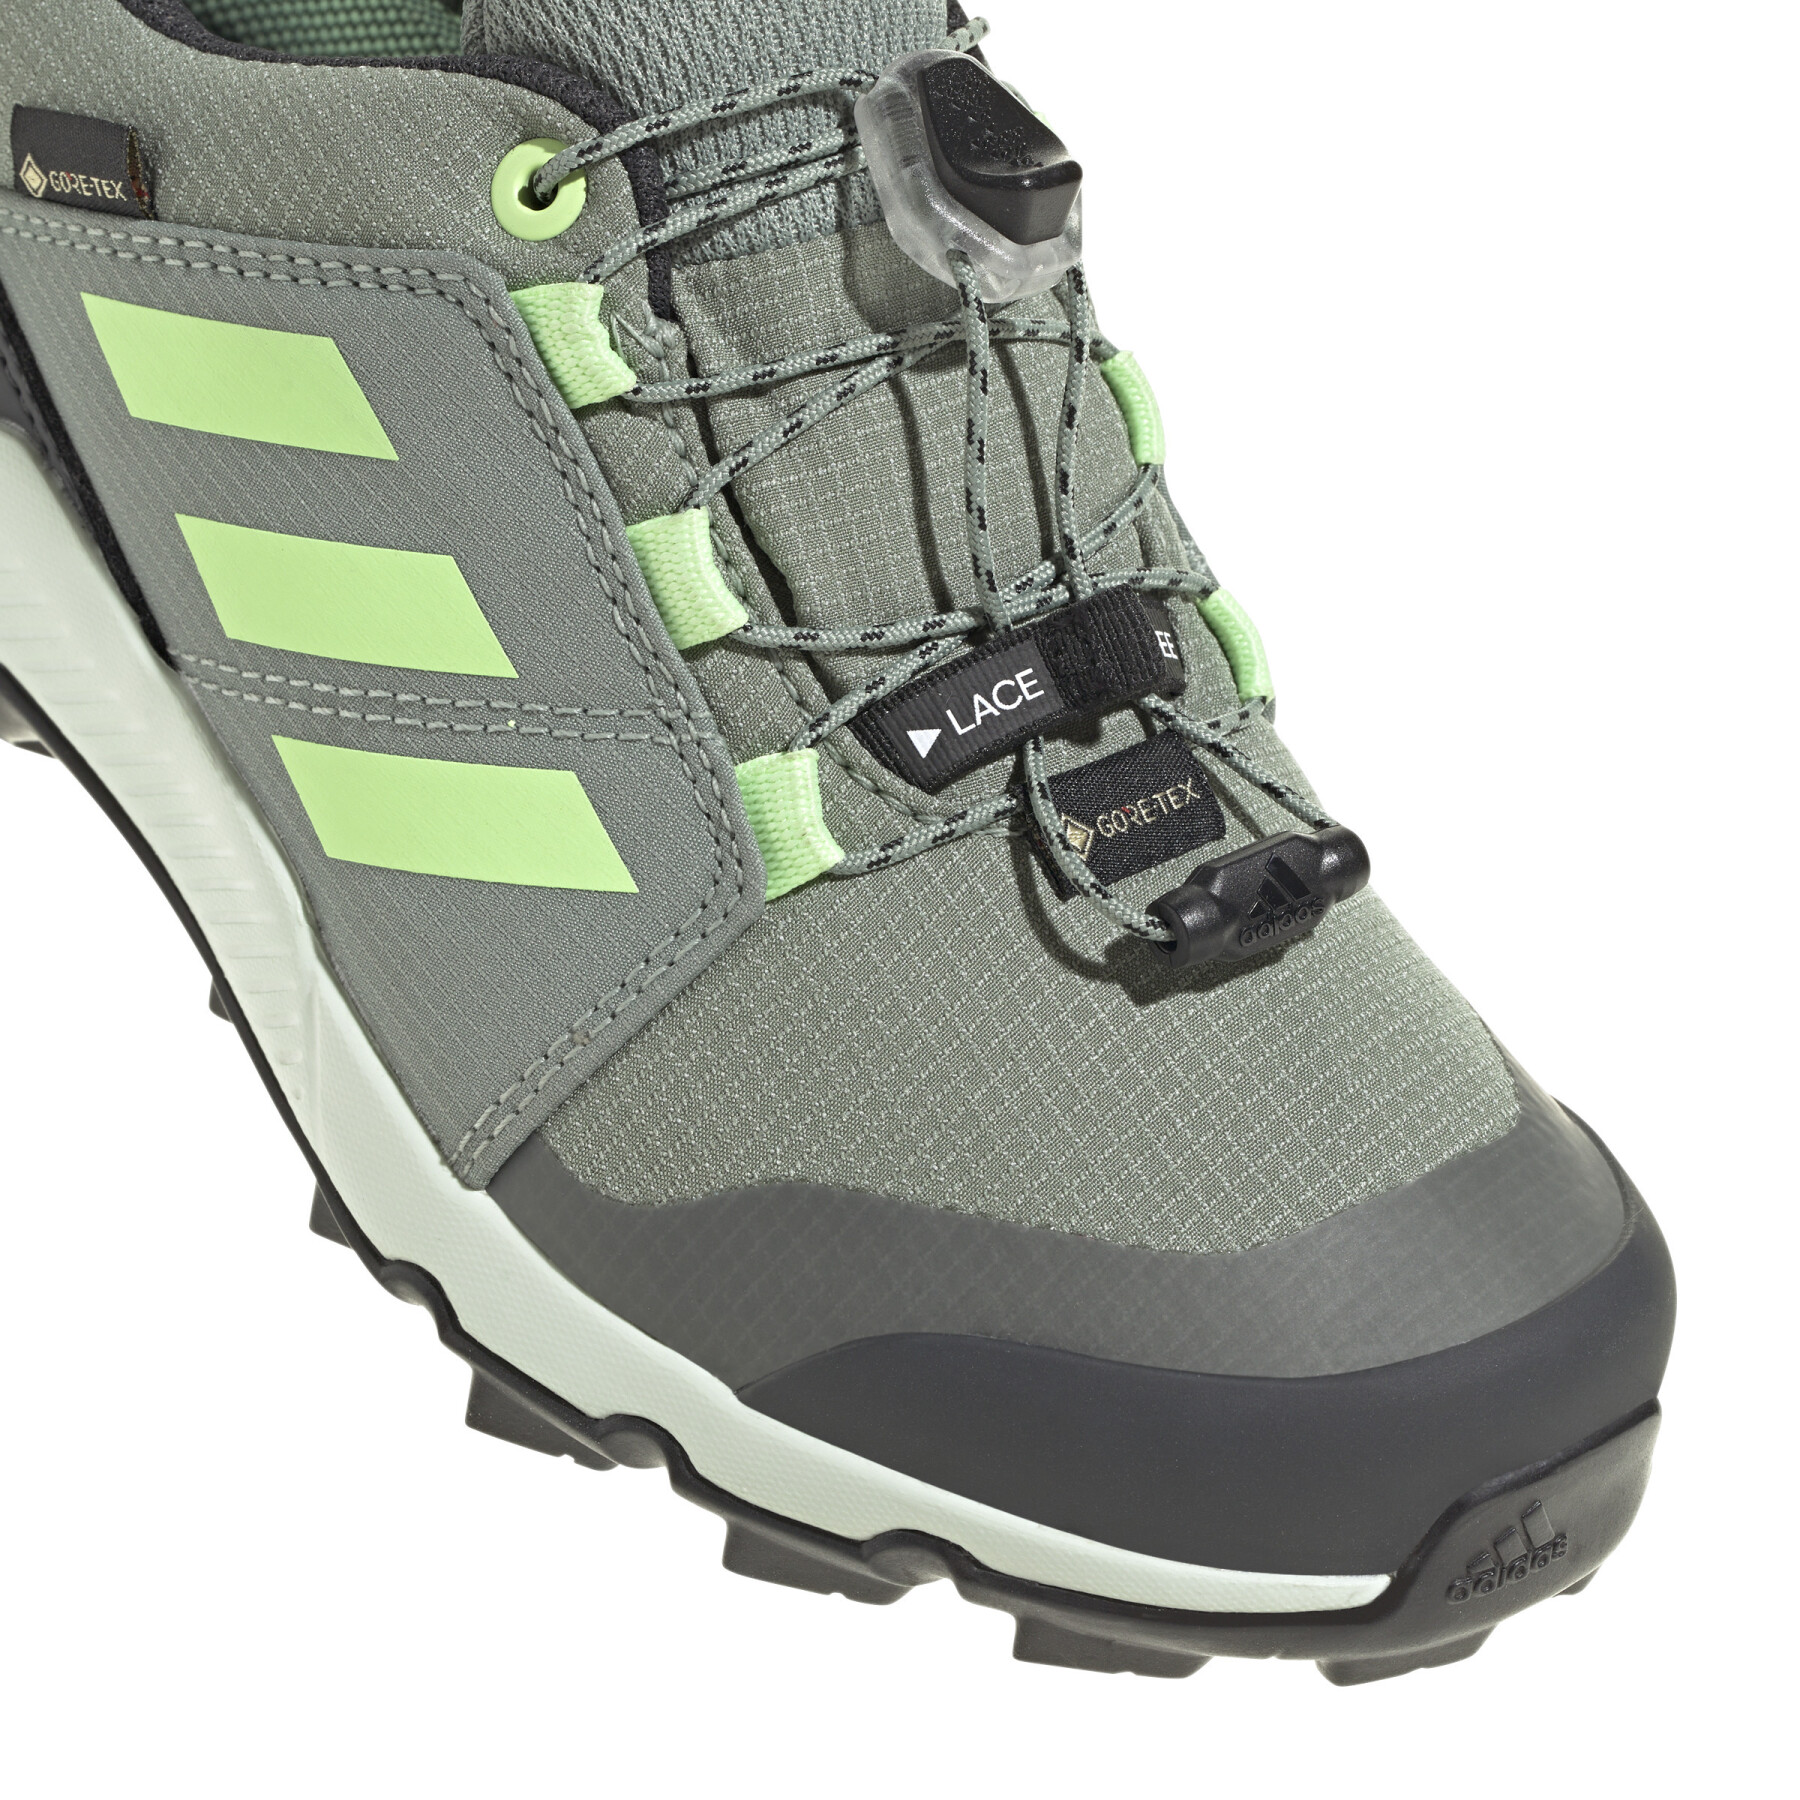 Children's trail running shoes adidas TerrexGore-Tex